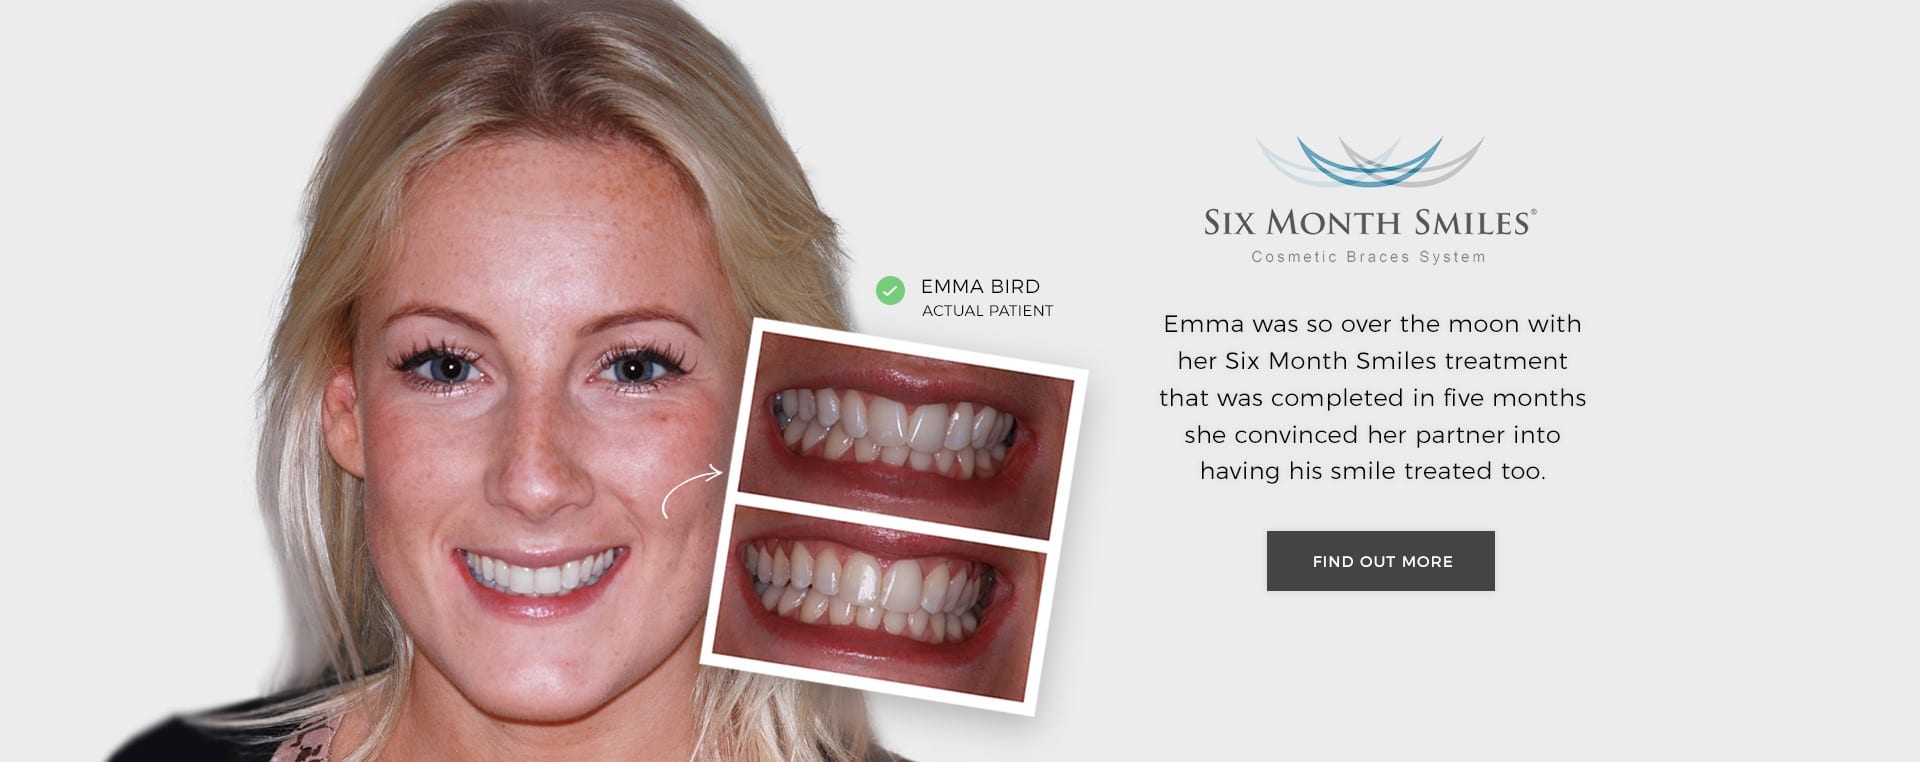 Six Month Smiles Braces Edinburgh - Barnton Dental Spa